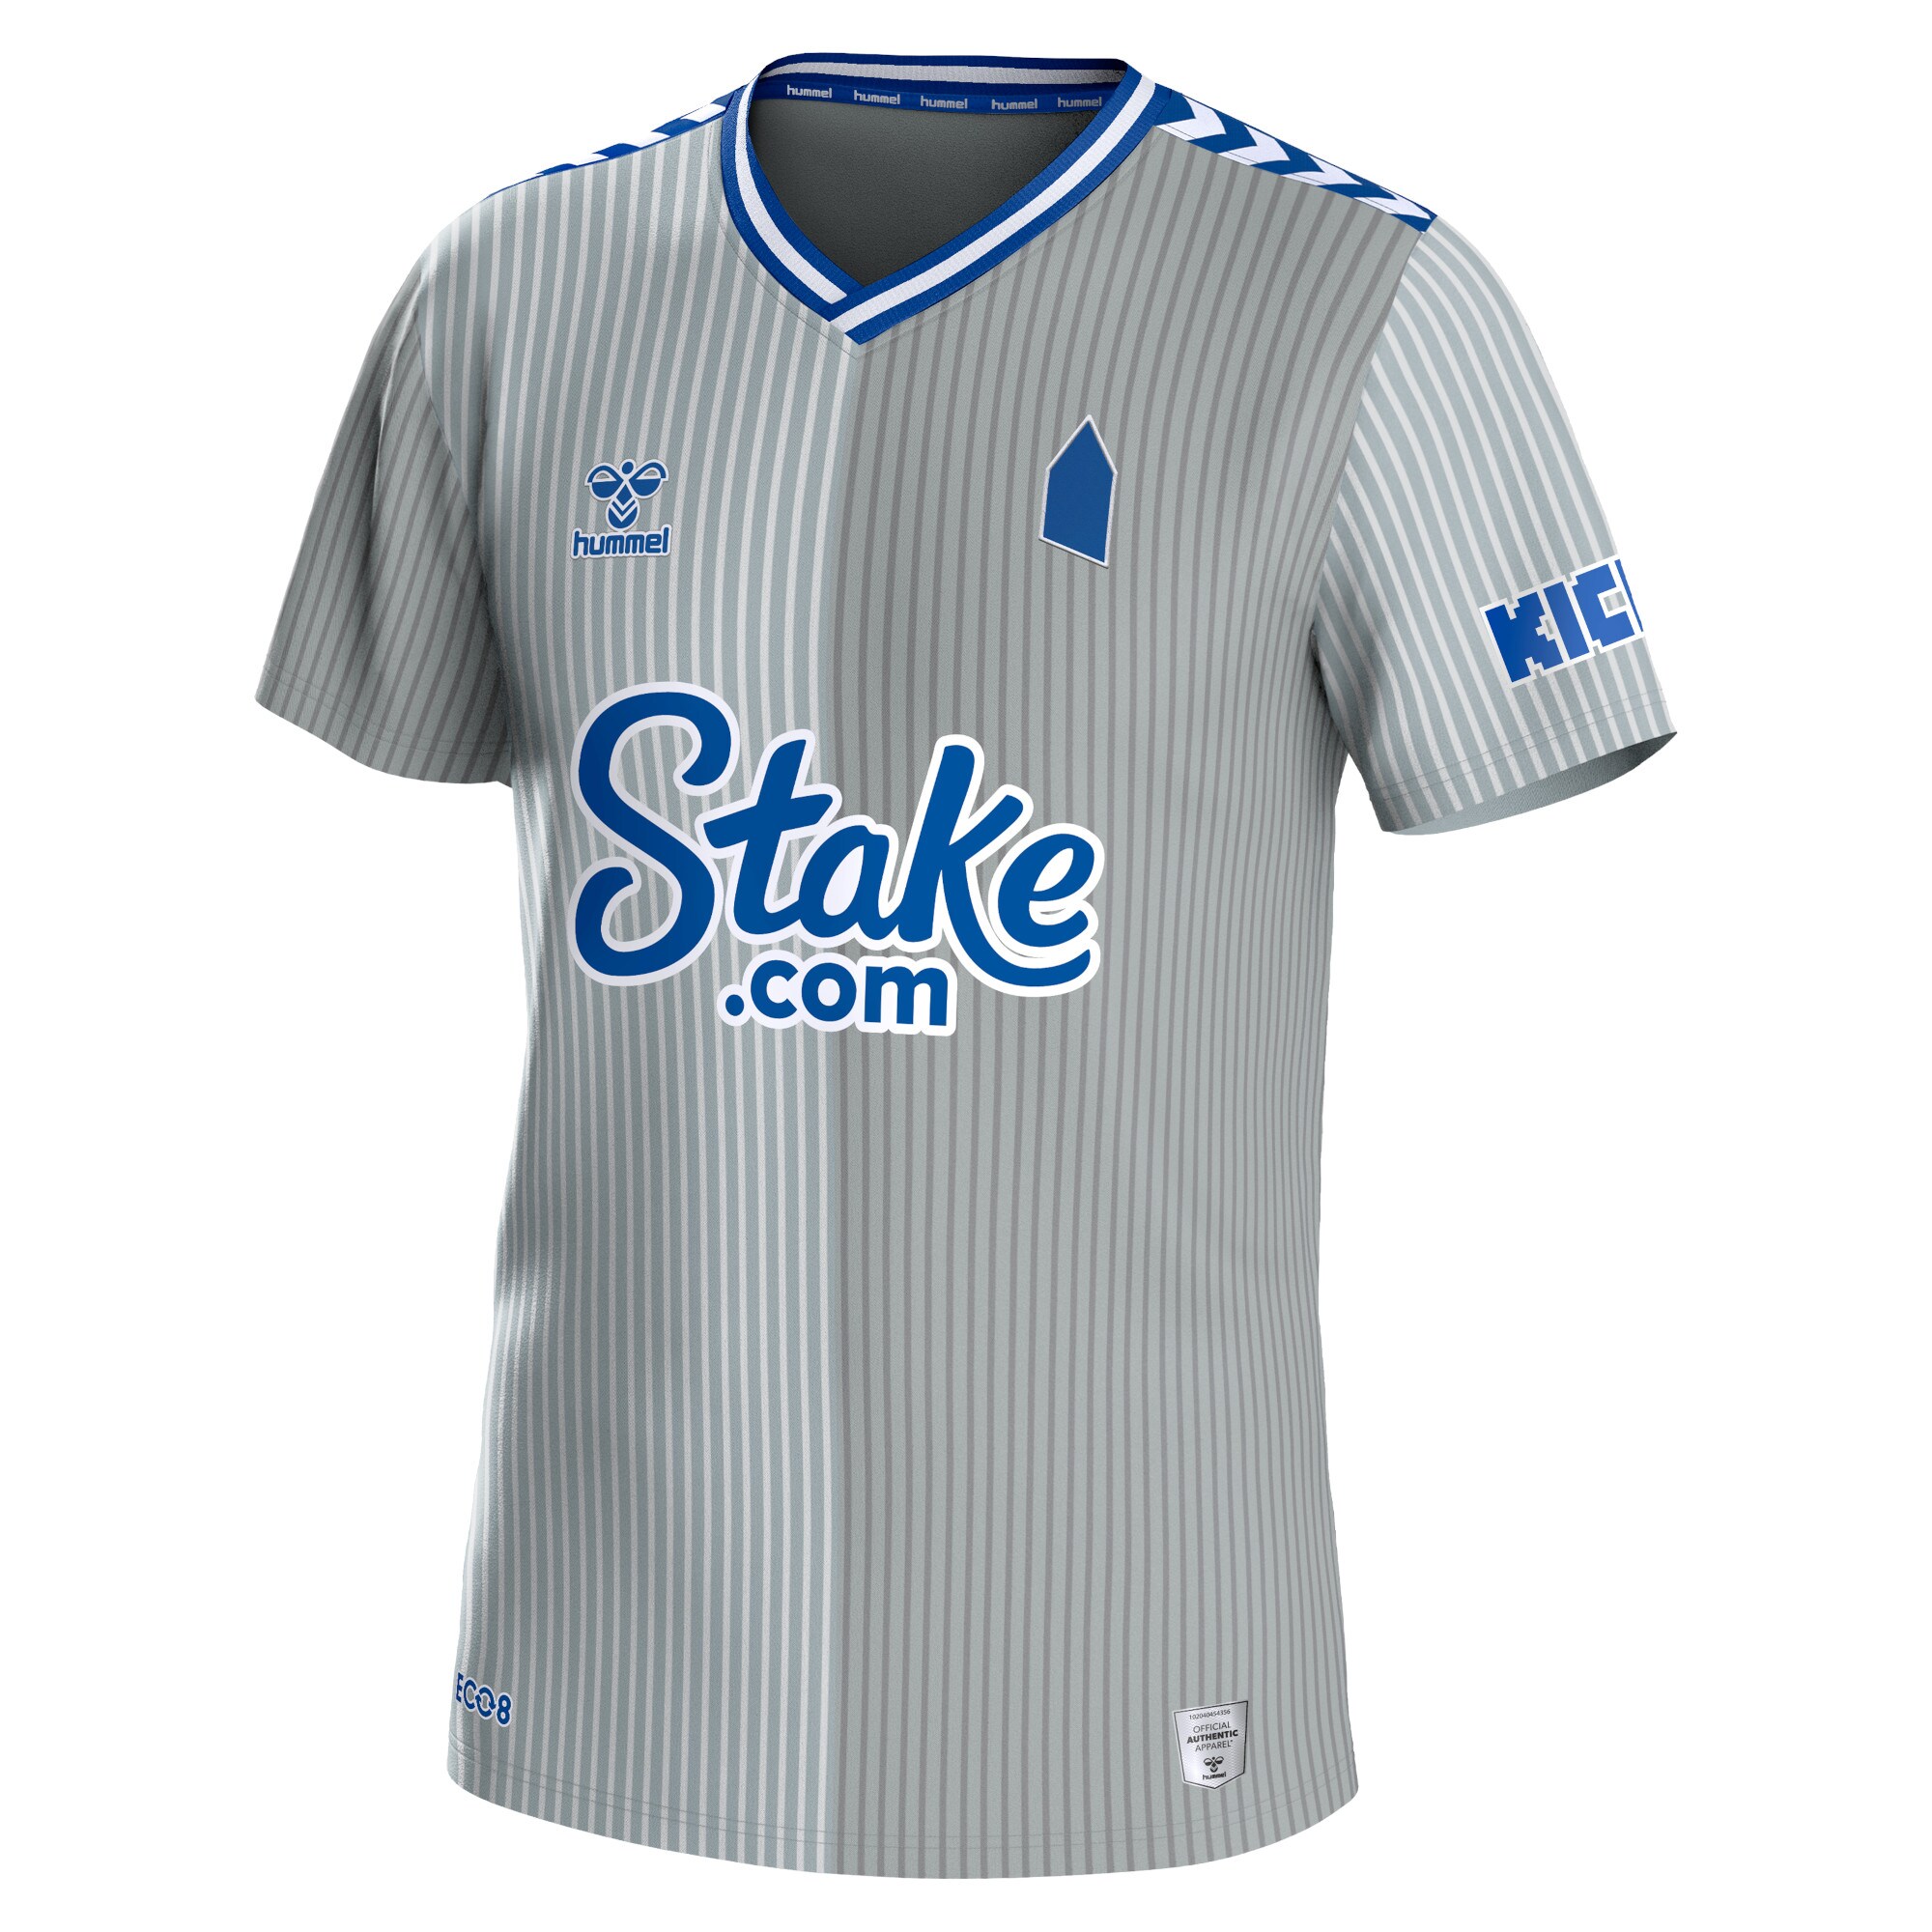 Everton WSL Third Shirt 2023-24 with Hope 17 printing